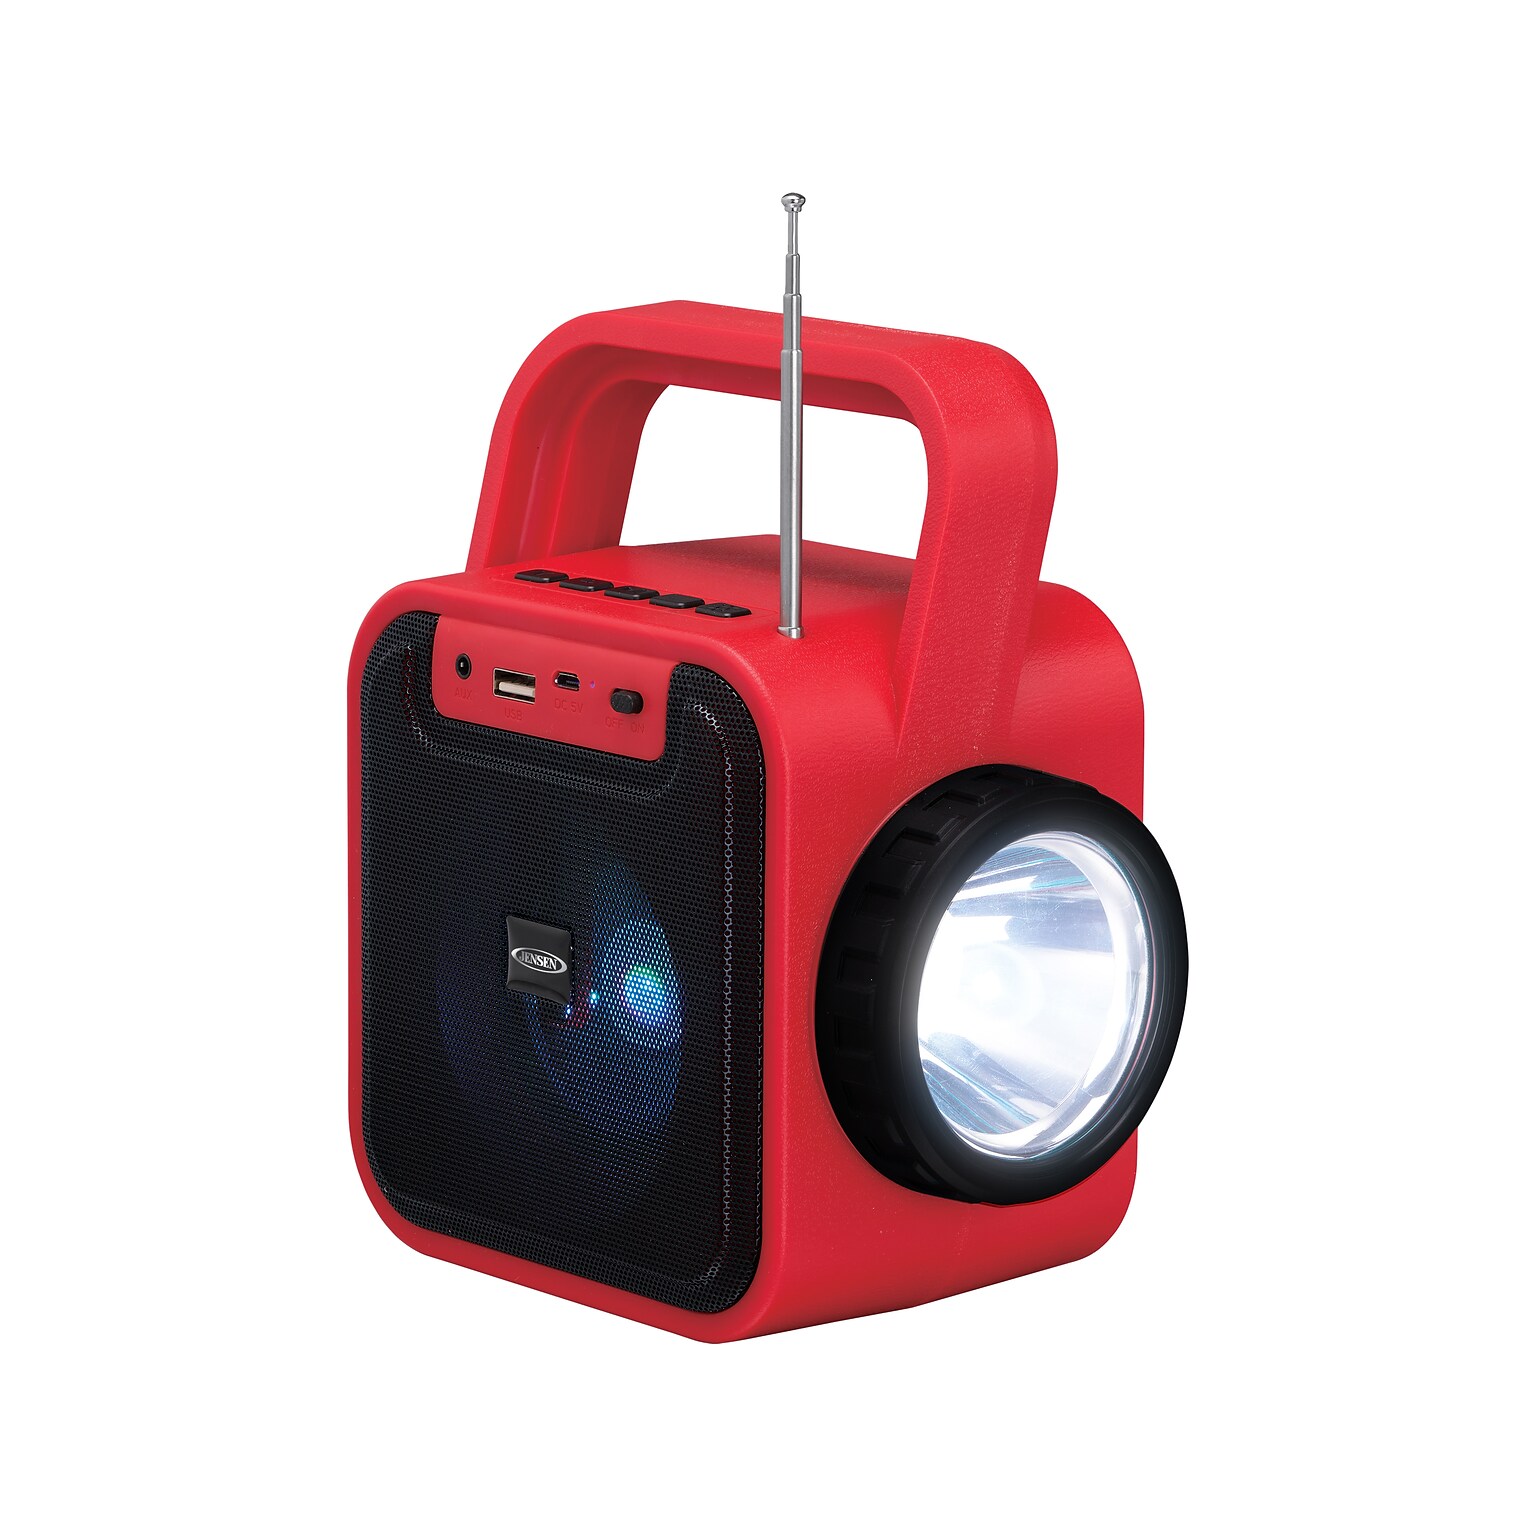 Jensen Wireless Bluetooth Radio with Flashlight, Red/Black (JEP-175)